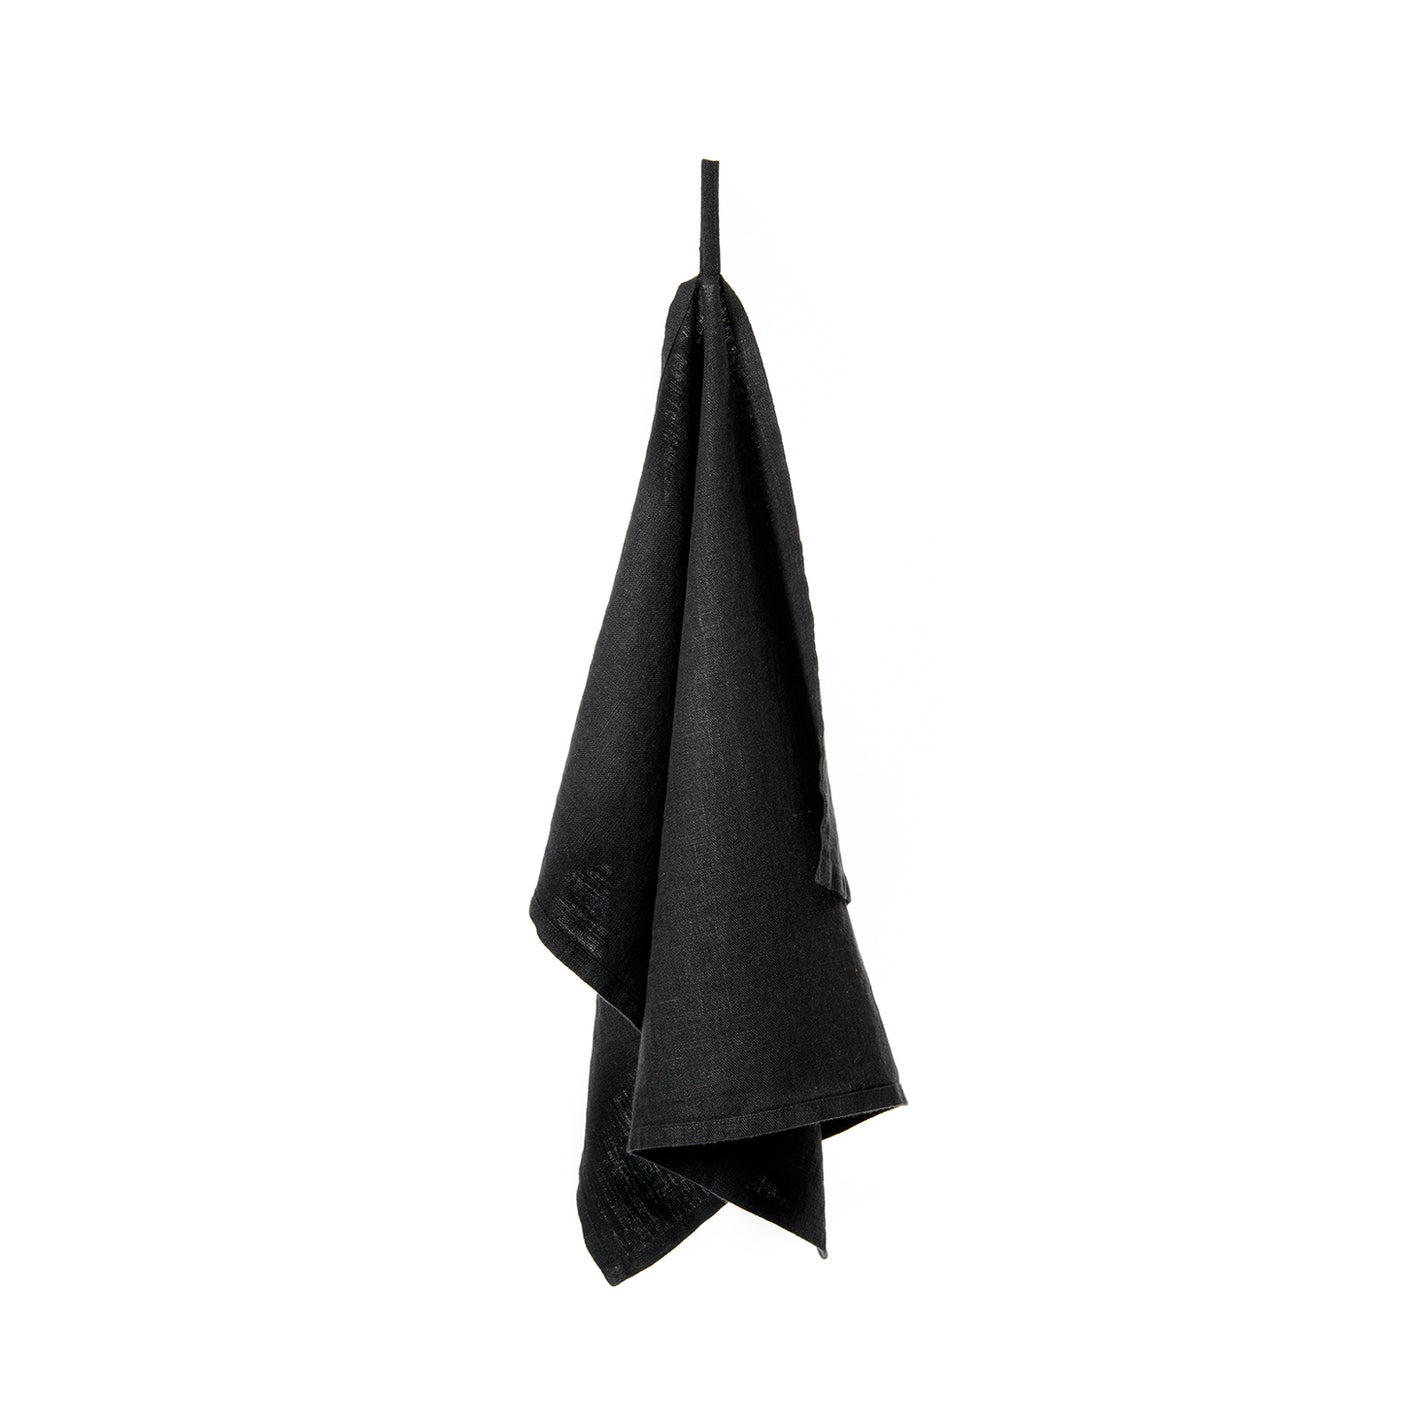 Les Choses Simples Linen Tea Towel - Black